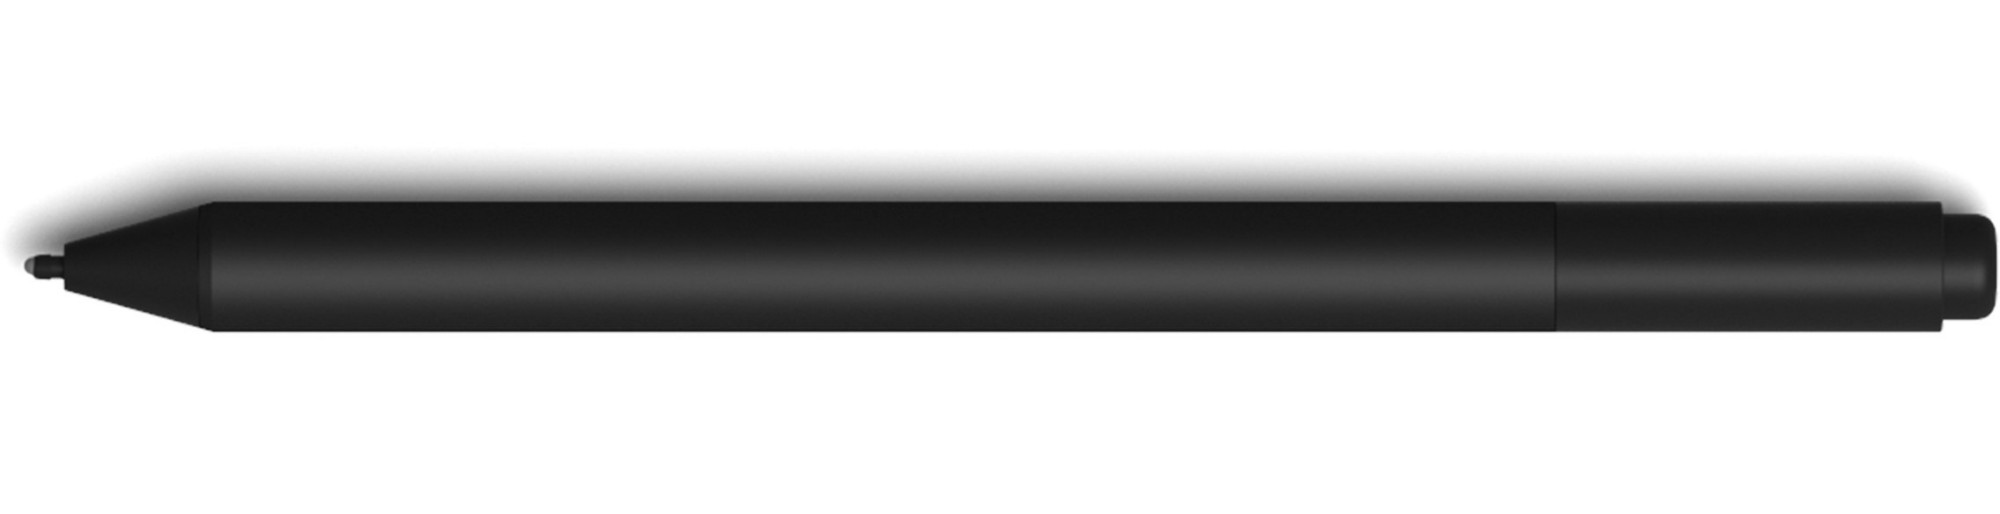 Microsoft Surface Pen stylus pen 20 g Charcoal